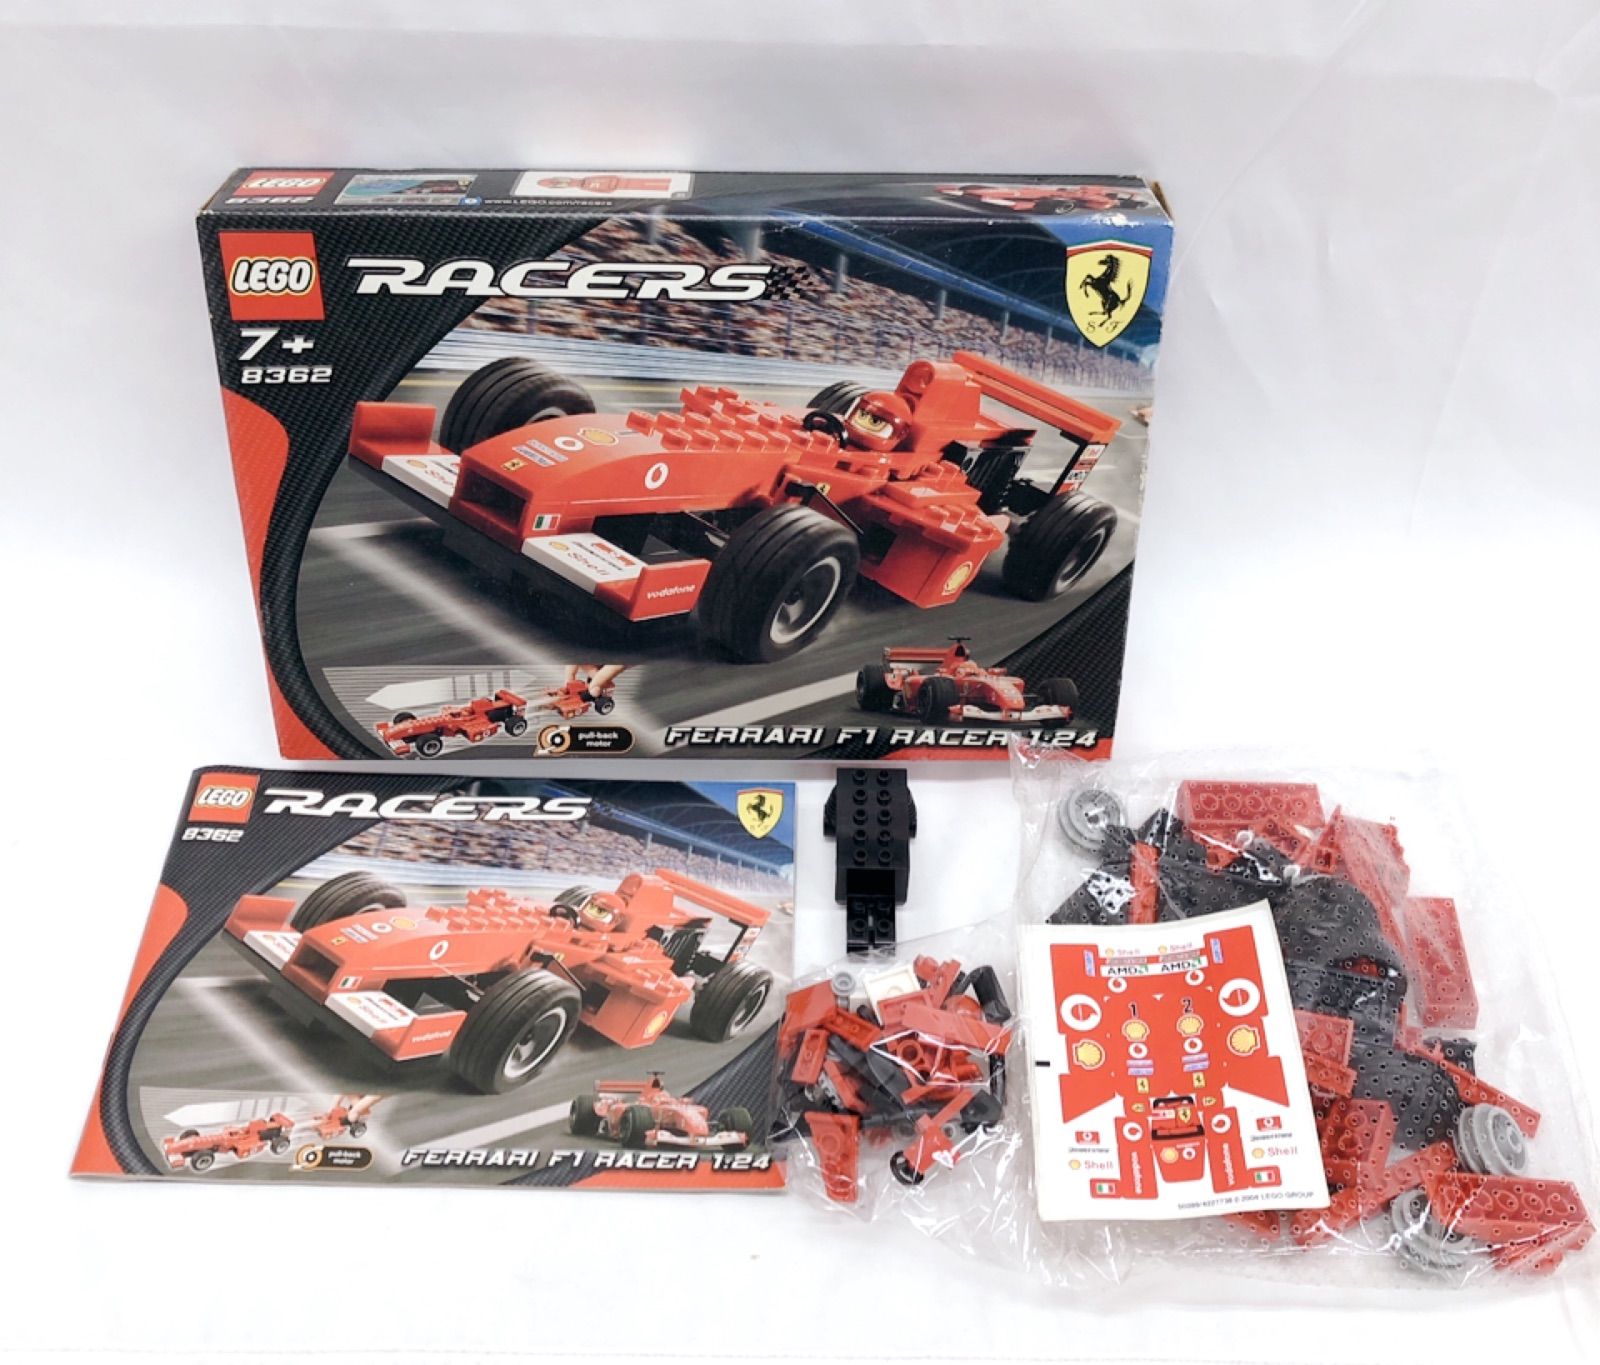 LEGO/レゴ RACERS 8362 - メルカリ